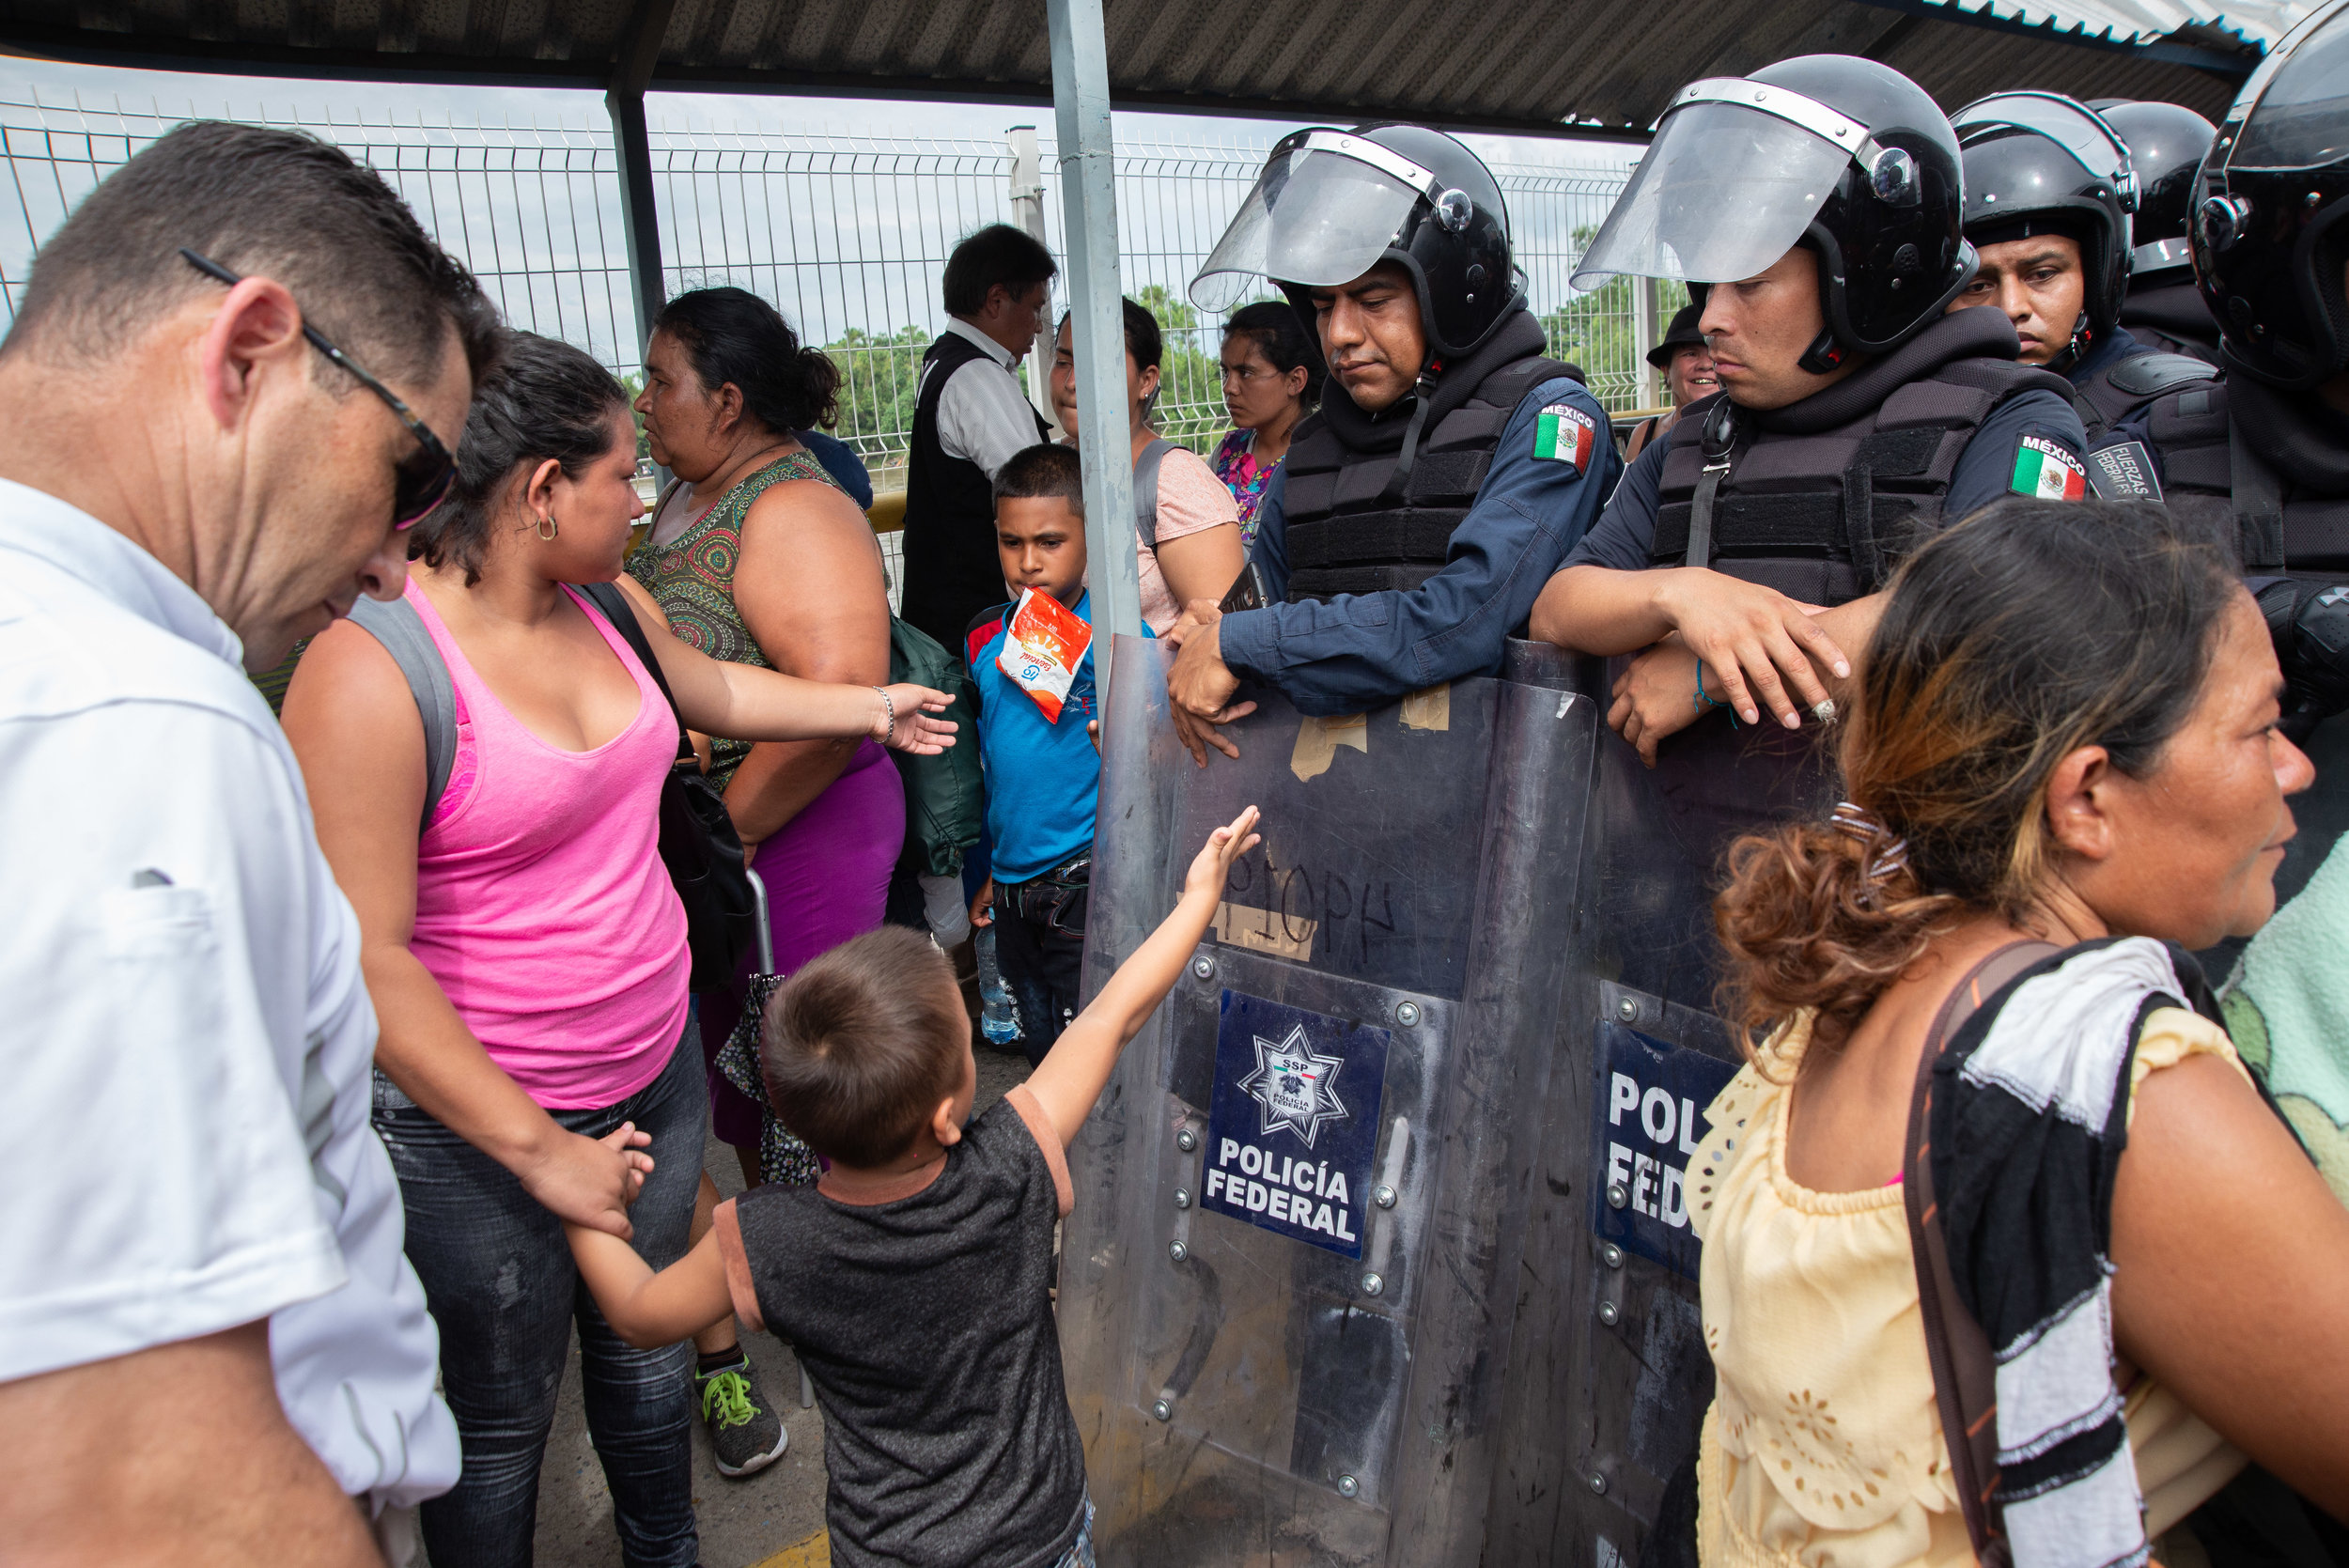  Los primeros migrantes de la caravana detenidos. | The first detained migrants part of the caravan. 